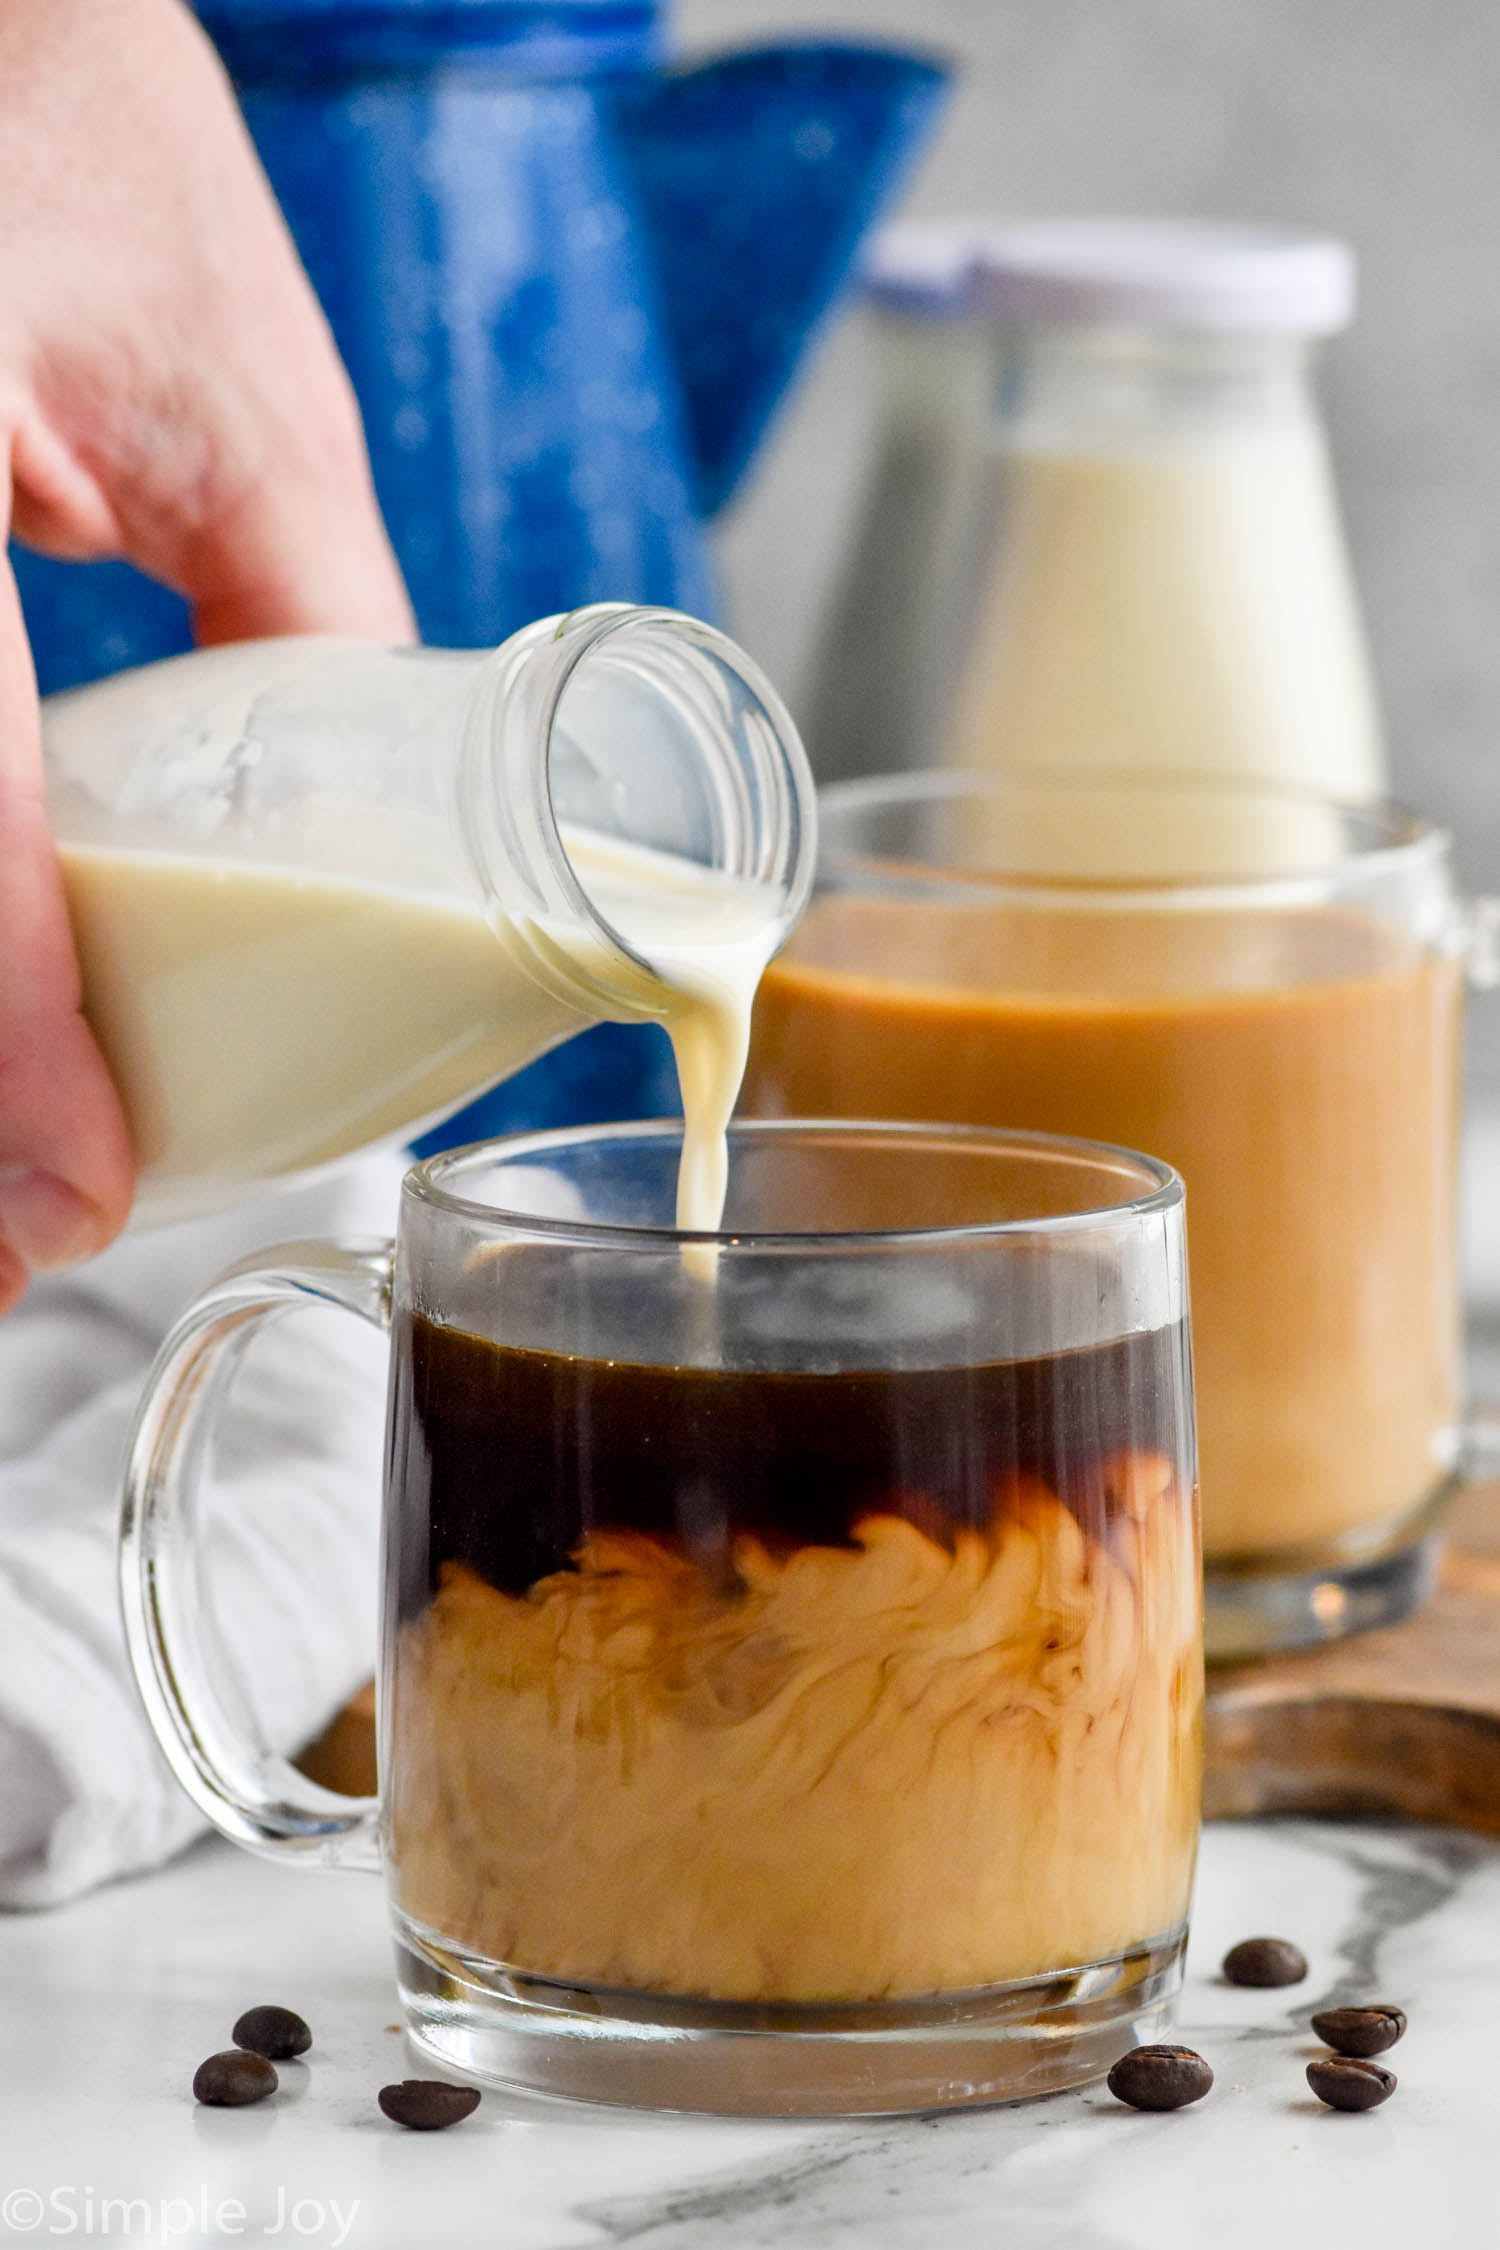 How to Make Homemade Coffee Creamer with Cinnamon